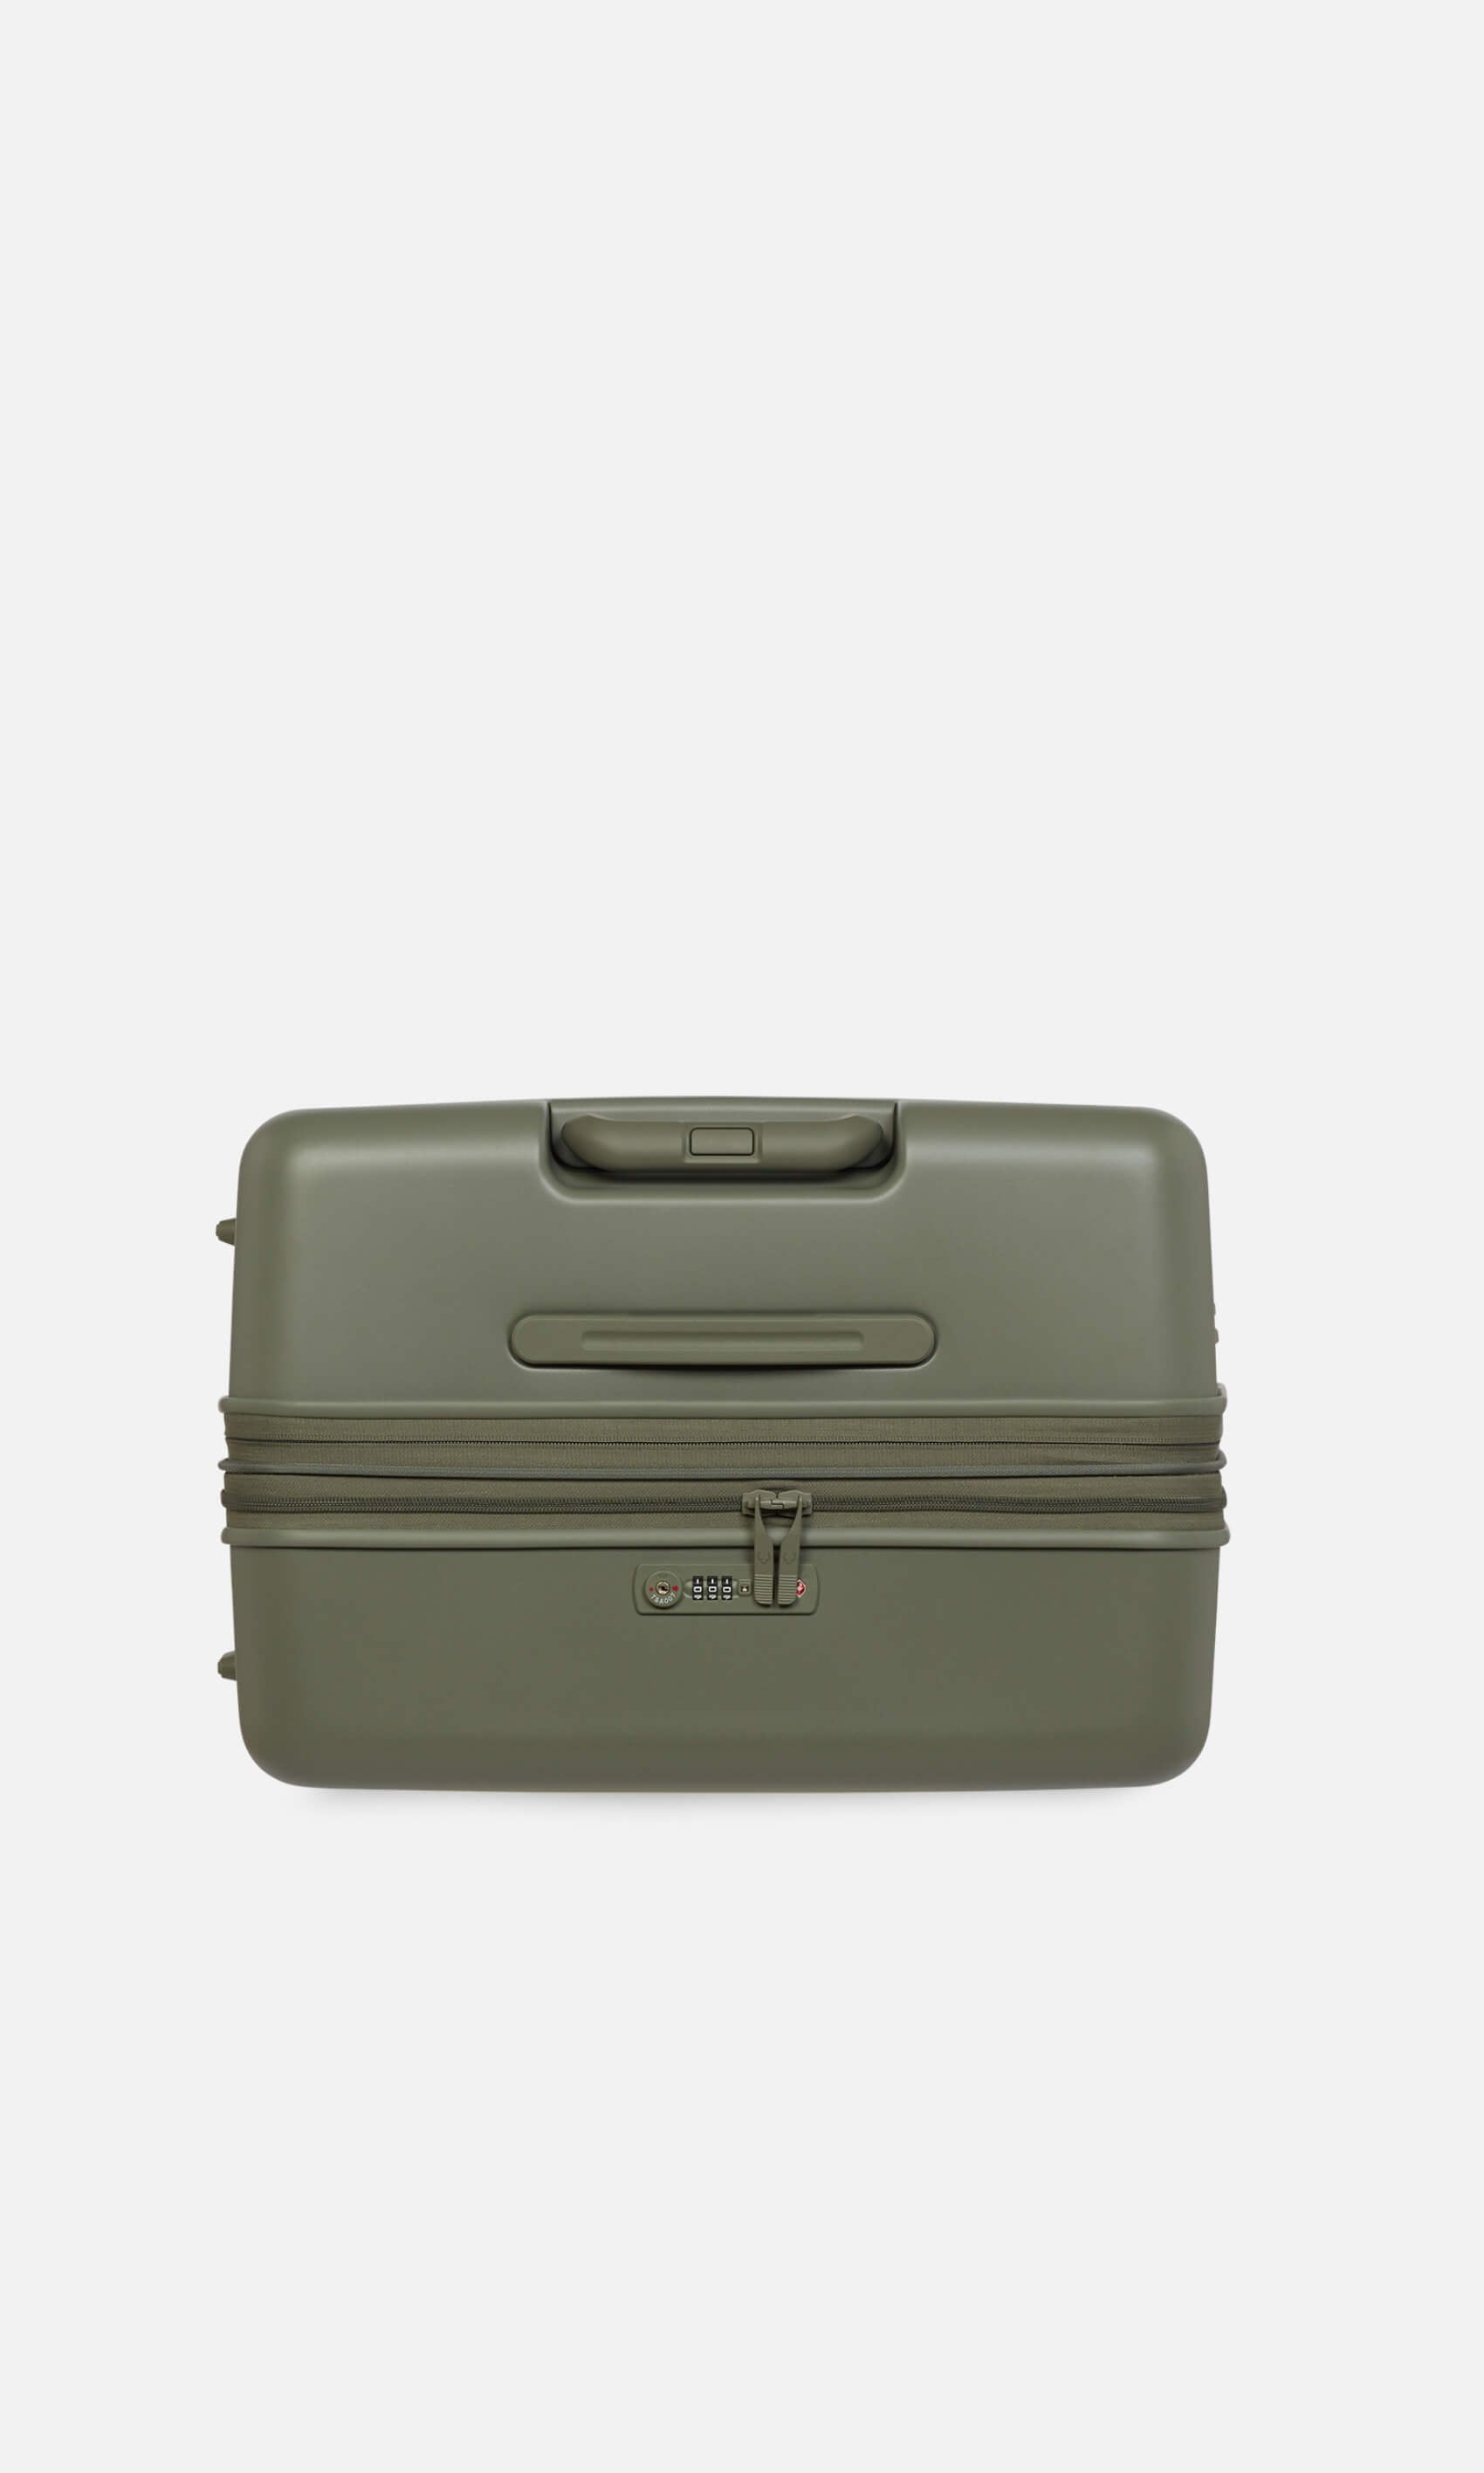 Antler Luggage -  Stamford large in field green - Hard Suitcases Stamford Large Suitcase Green | Hard Luggage | Antler 